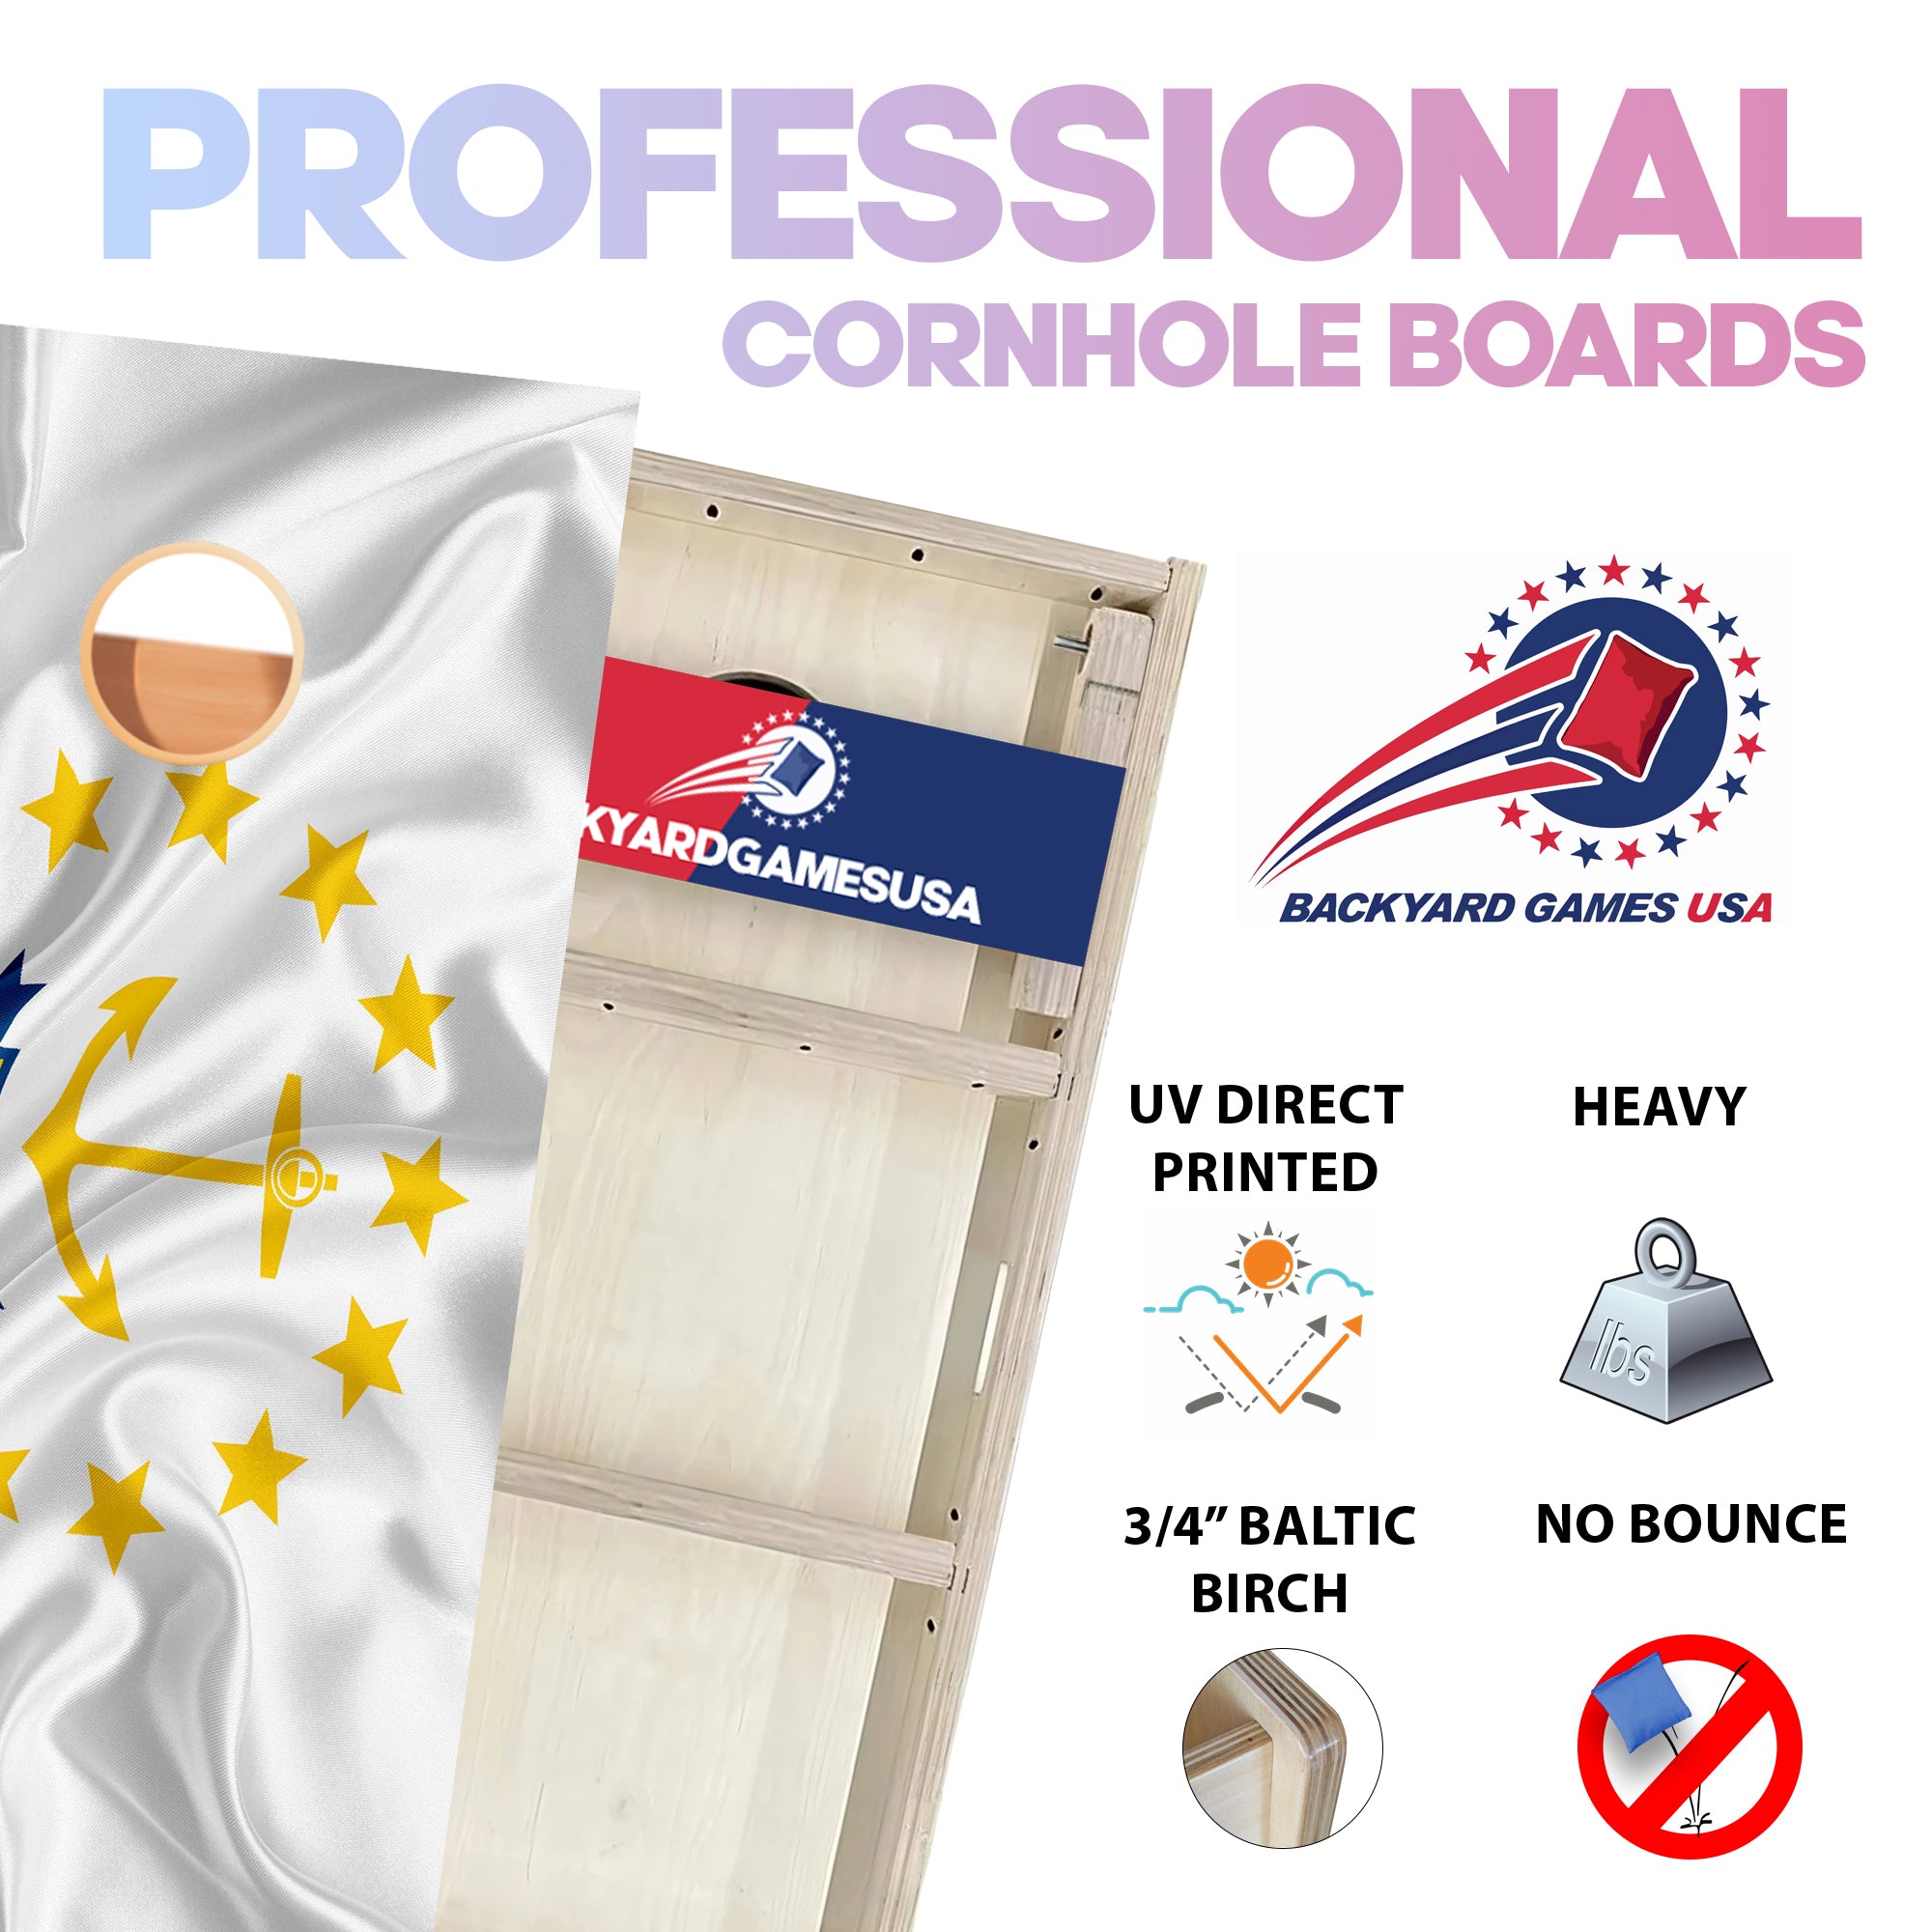 Rhode Island Professional Cornhole Boards